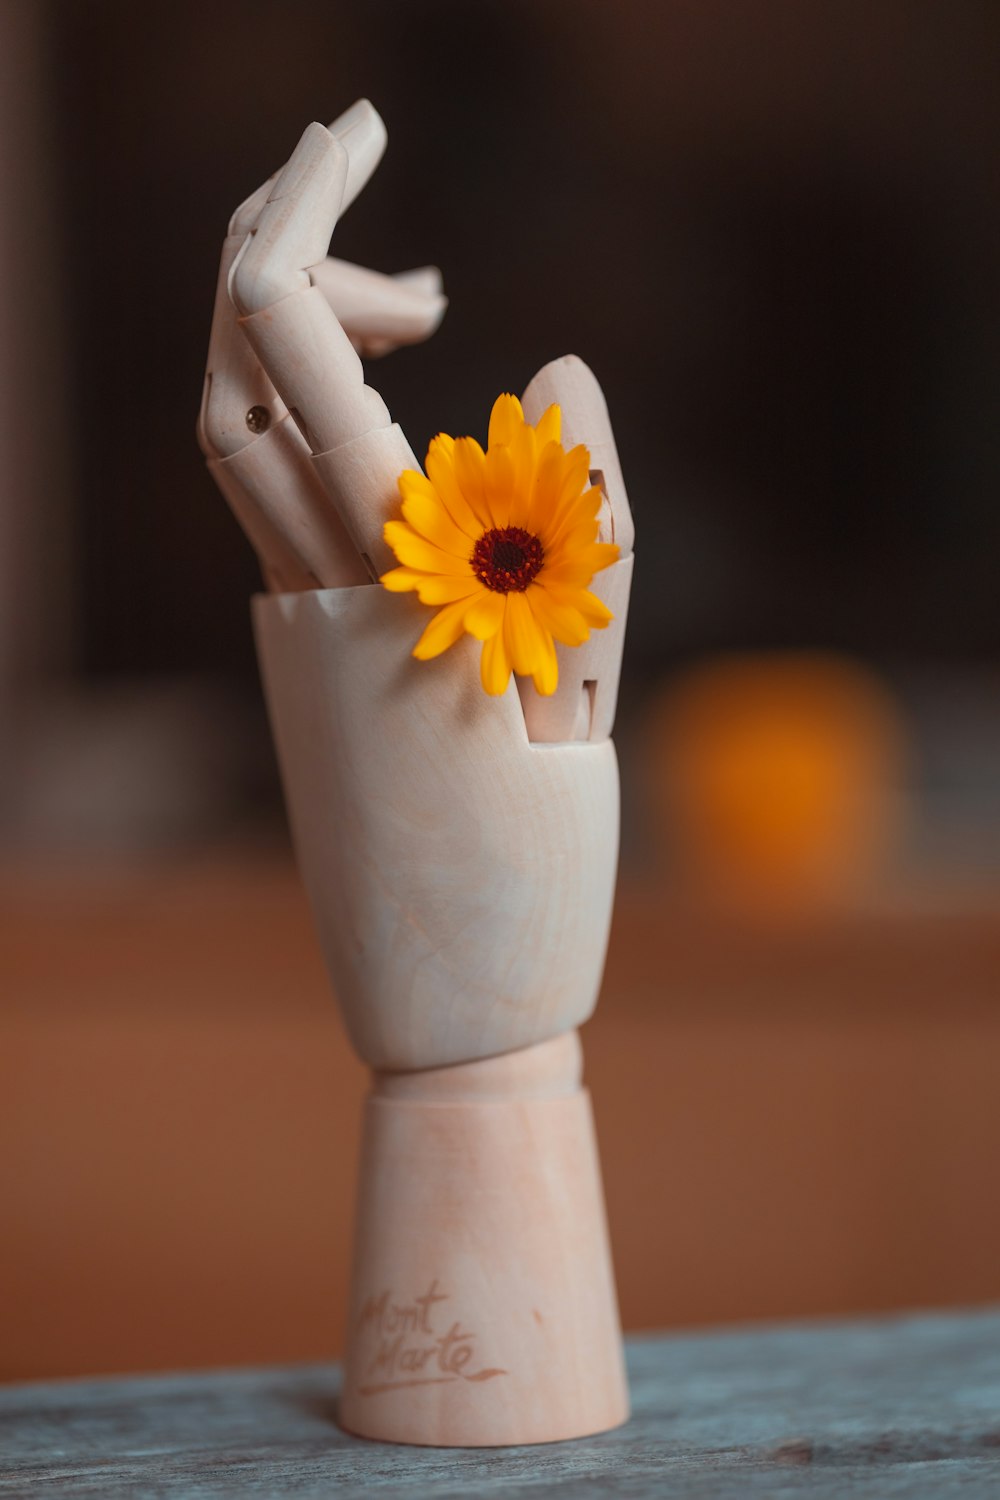 a ceramic sculpture of a hand holding a sunflower